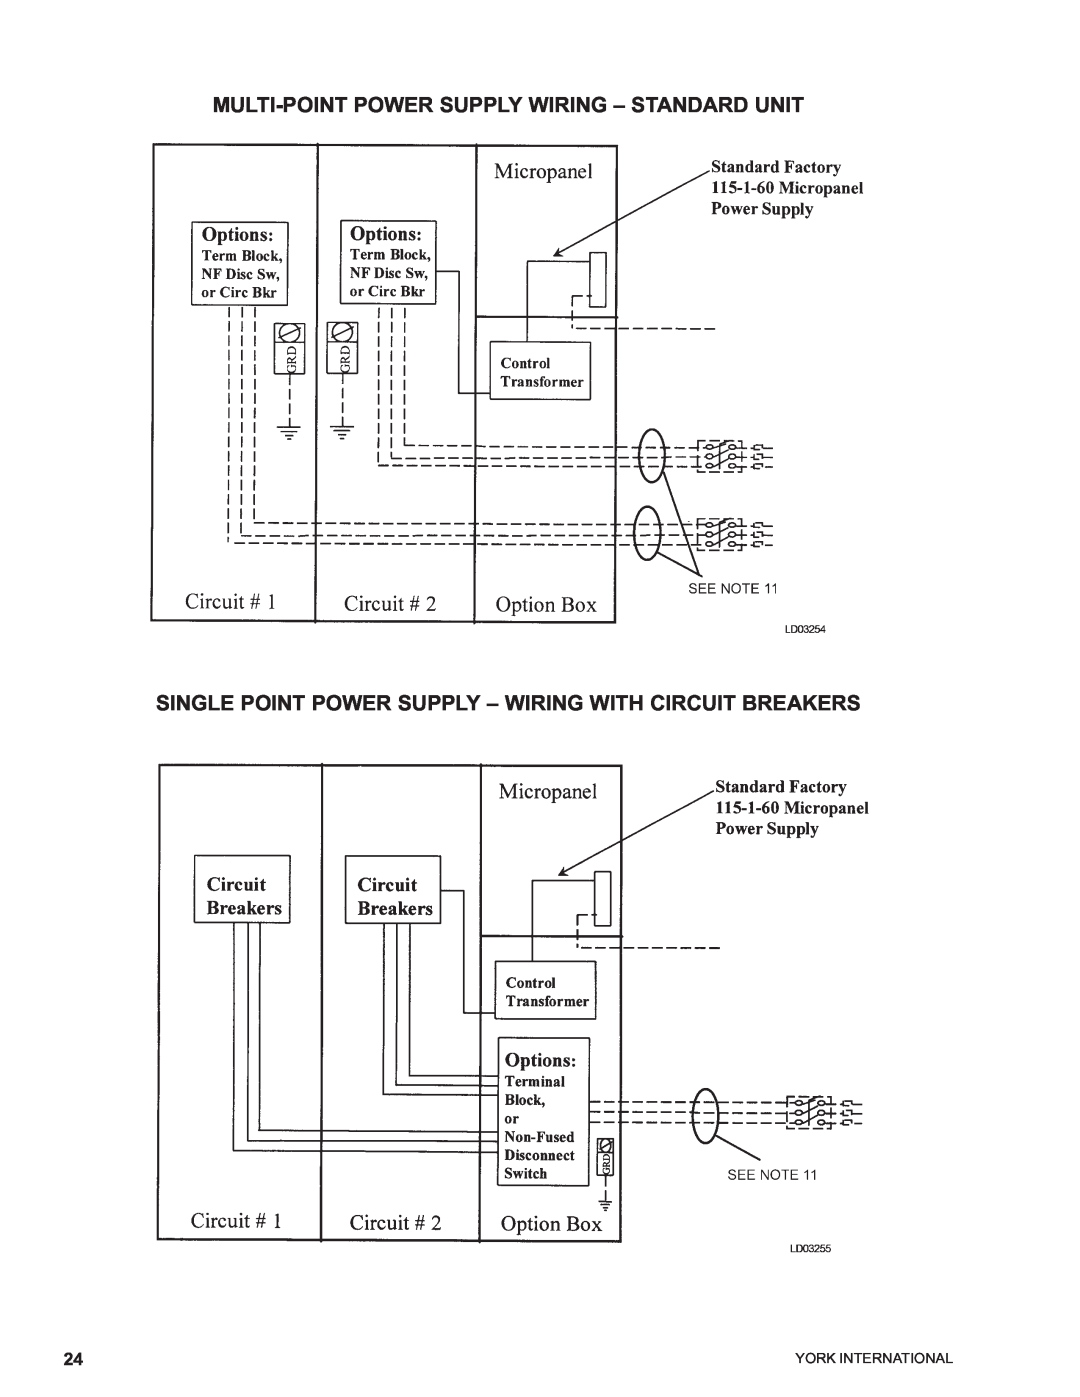 York YCAS0230 manual LD03254, LD03255, Multi-Pointpower Supply Wiring - Standard Unit 